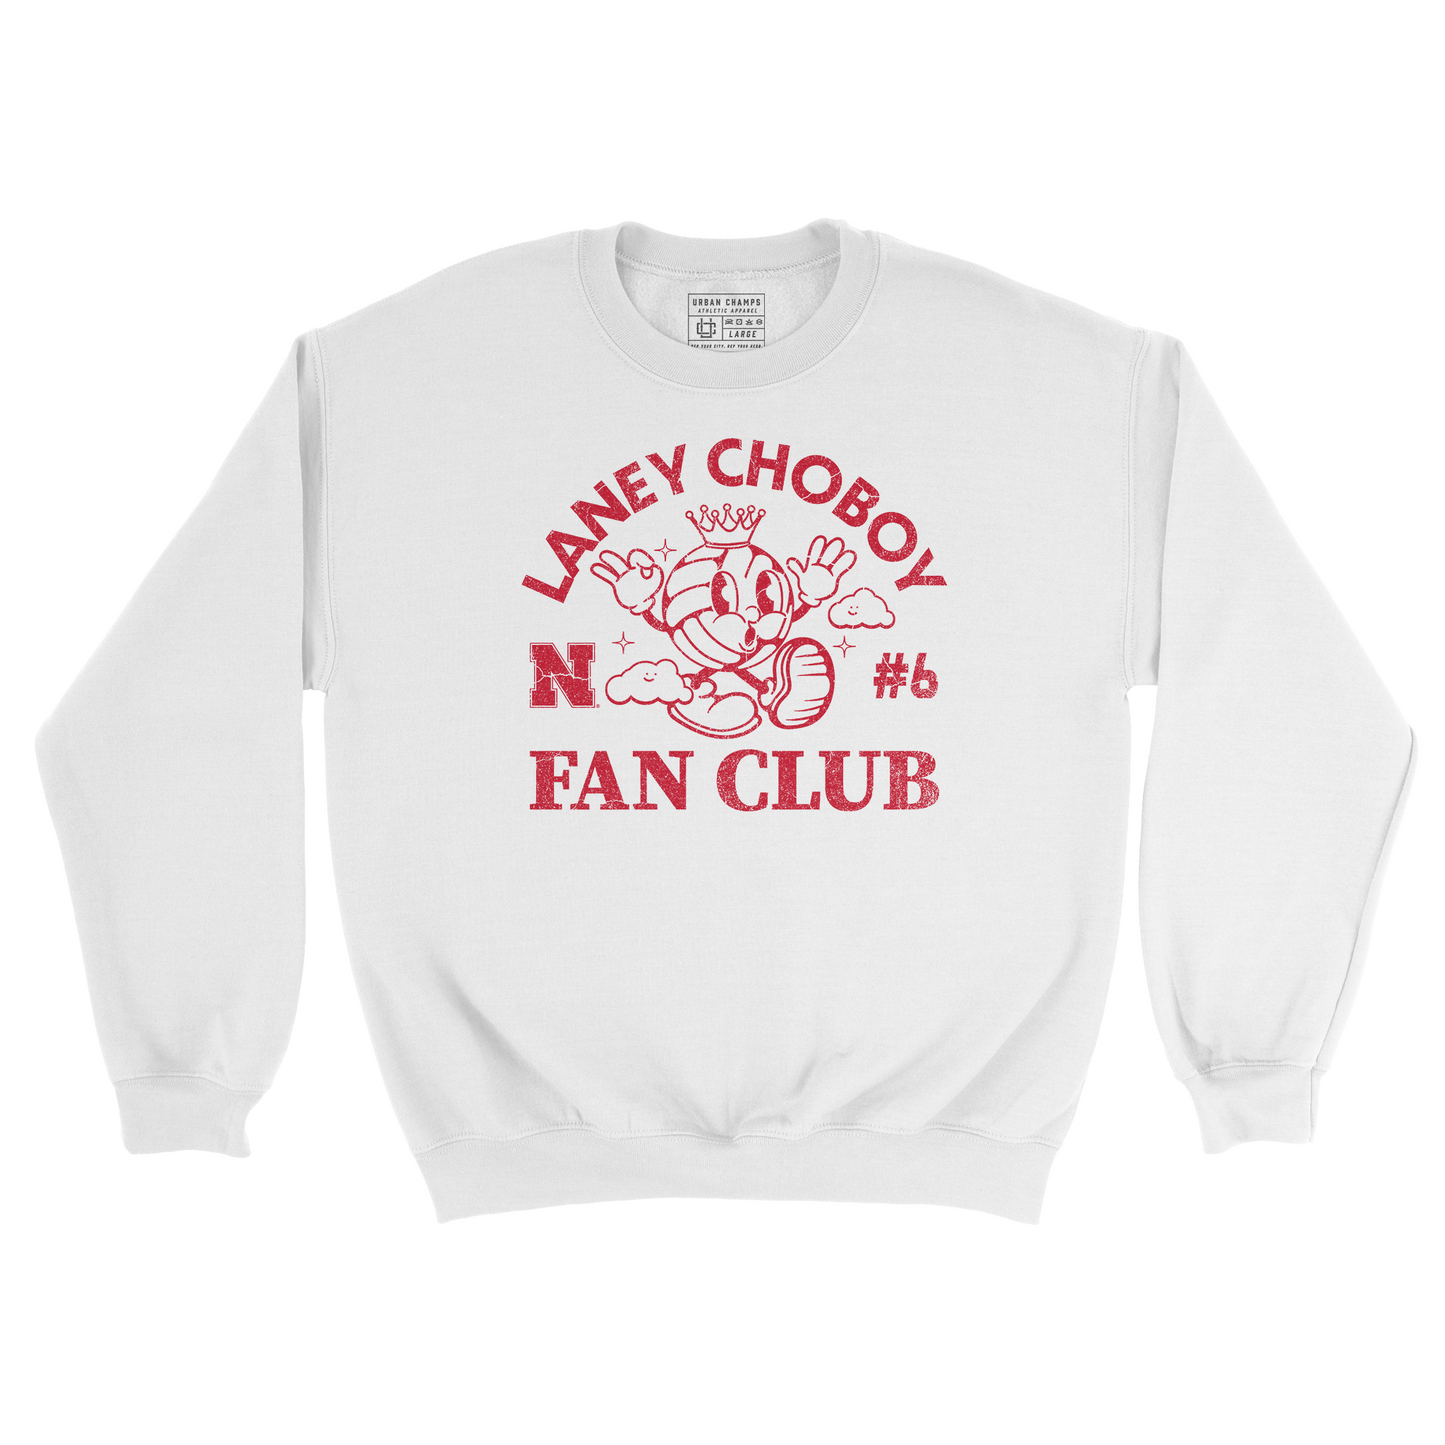 EXCLUSIVE: Nebraska Women's Volleyball - Laney Choboy - Fan Club Collection Crews